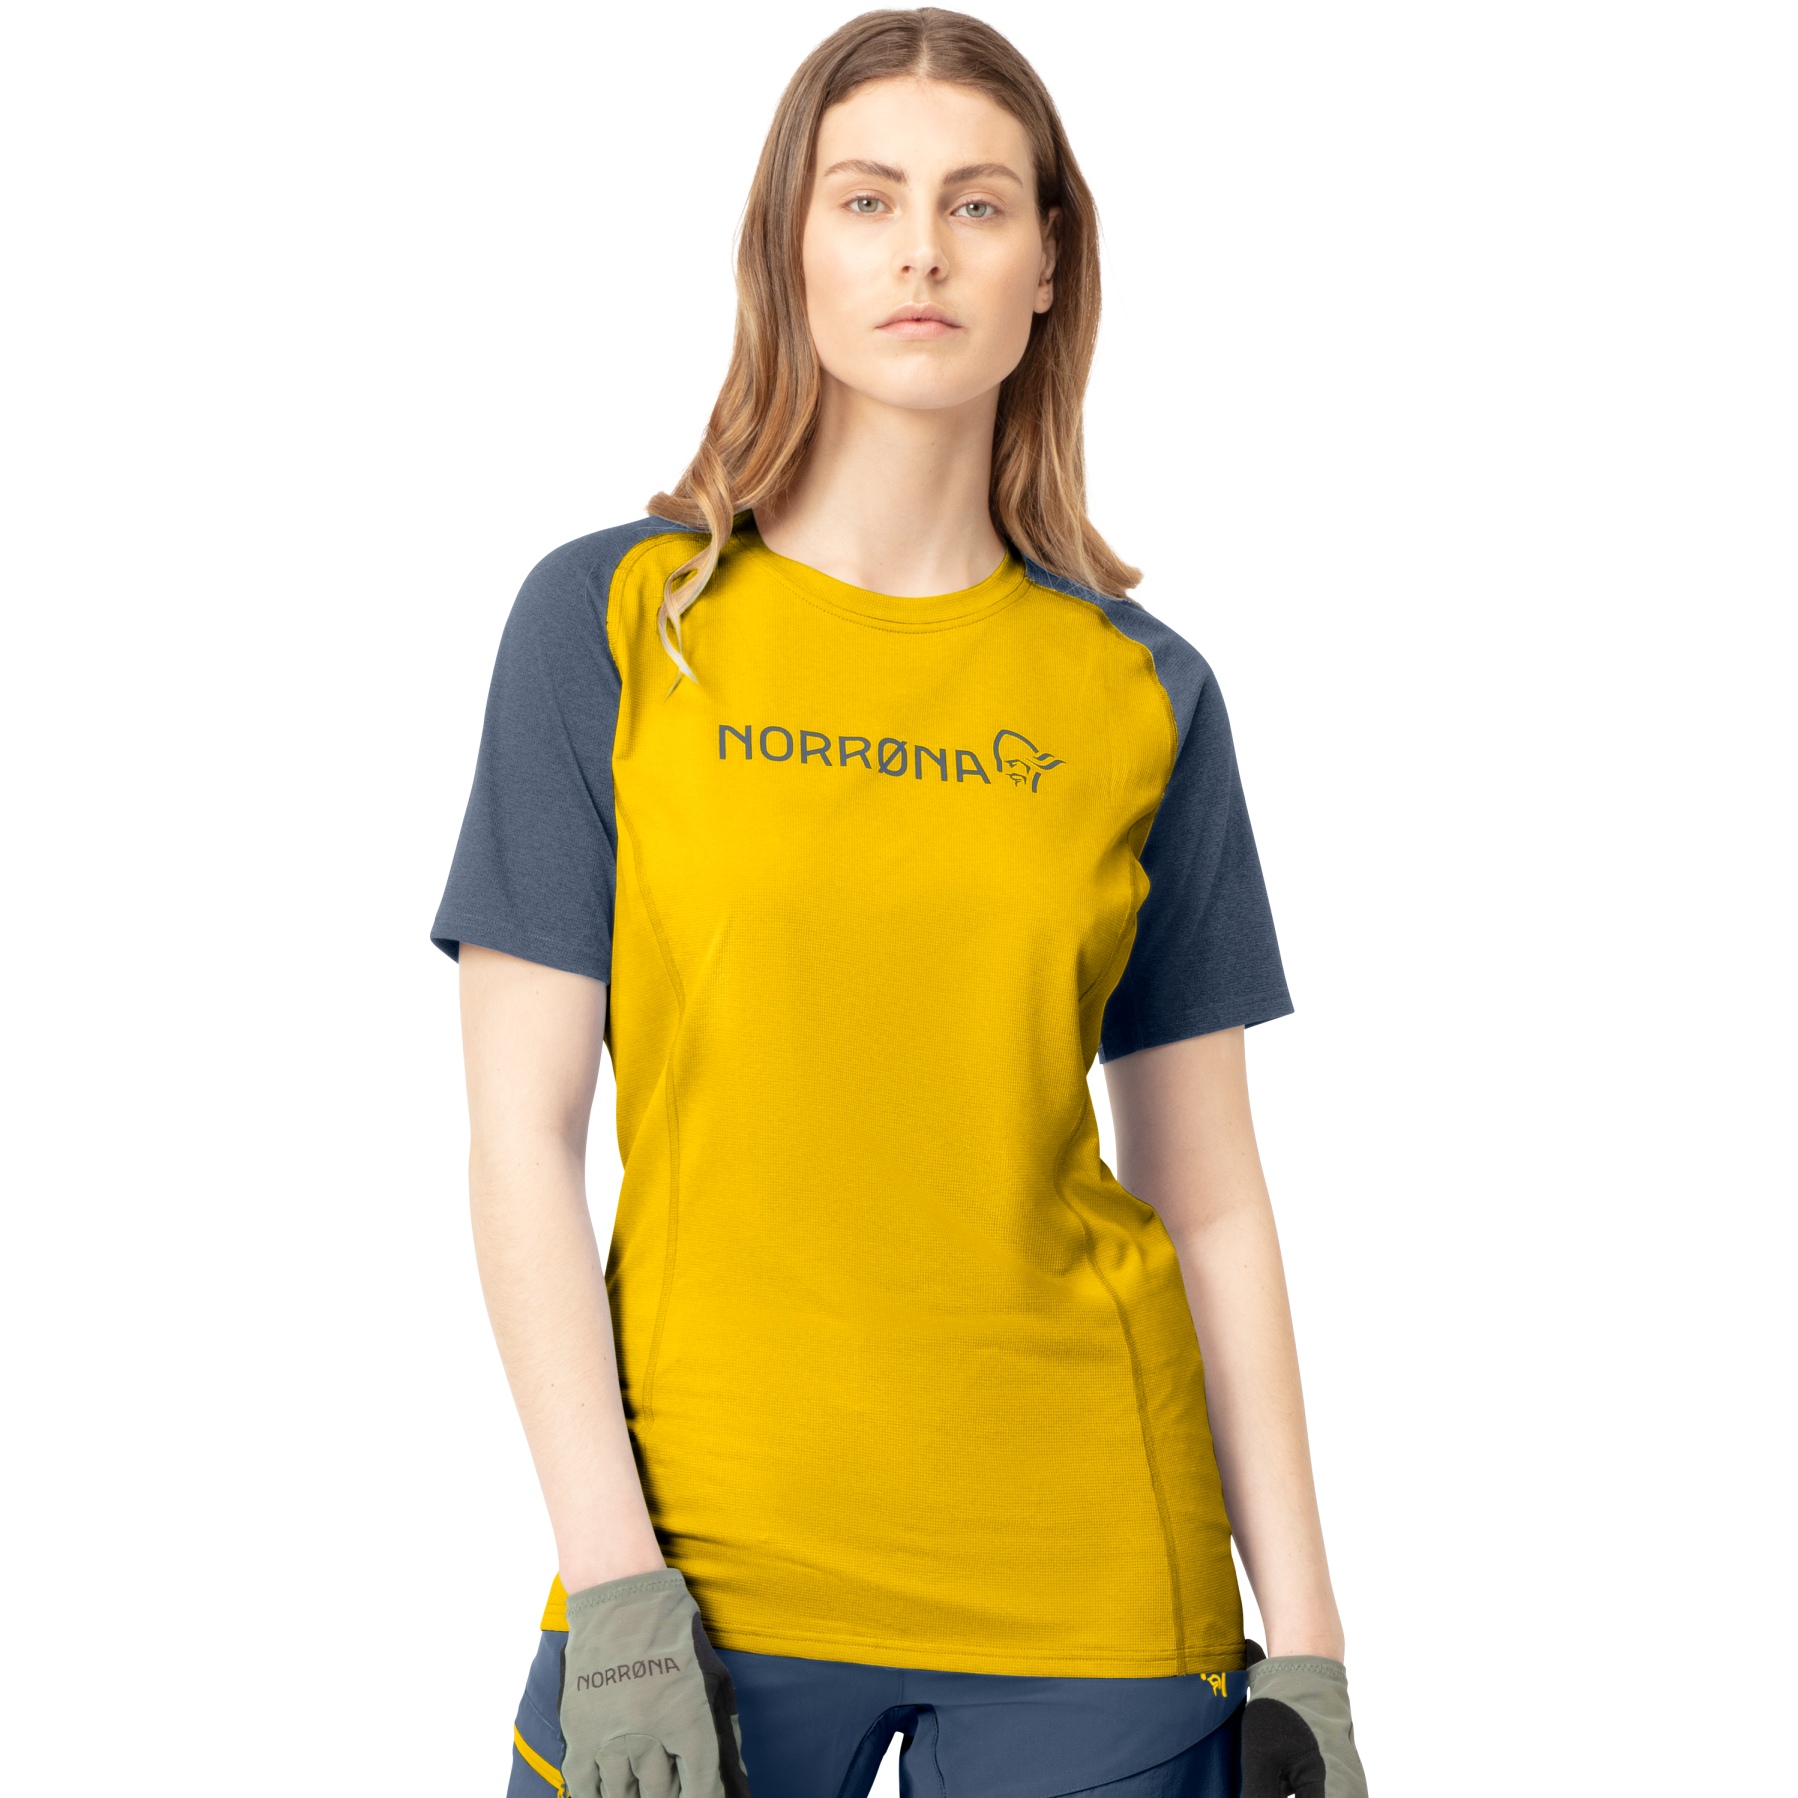 Produktbild von Norrona fjørå equaliser lightweight T-Shirt Damen - Sulphur/Vintage Indigo